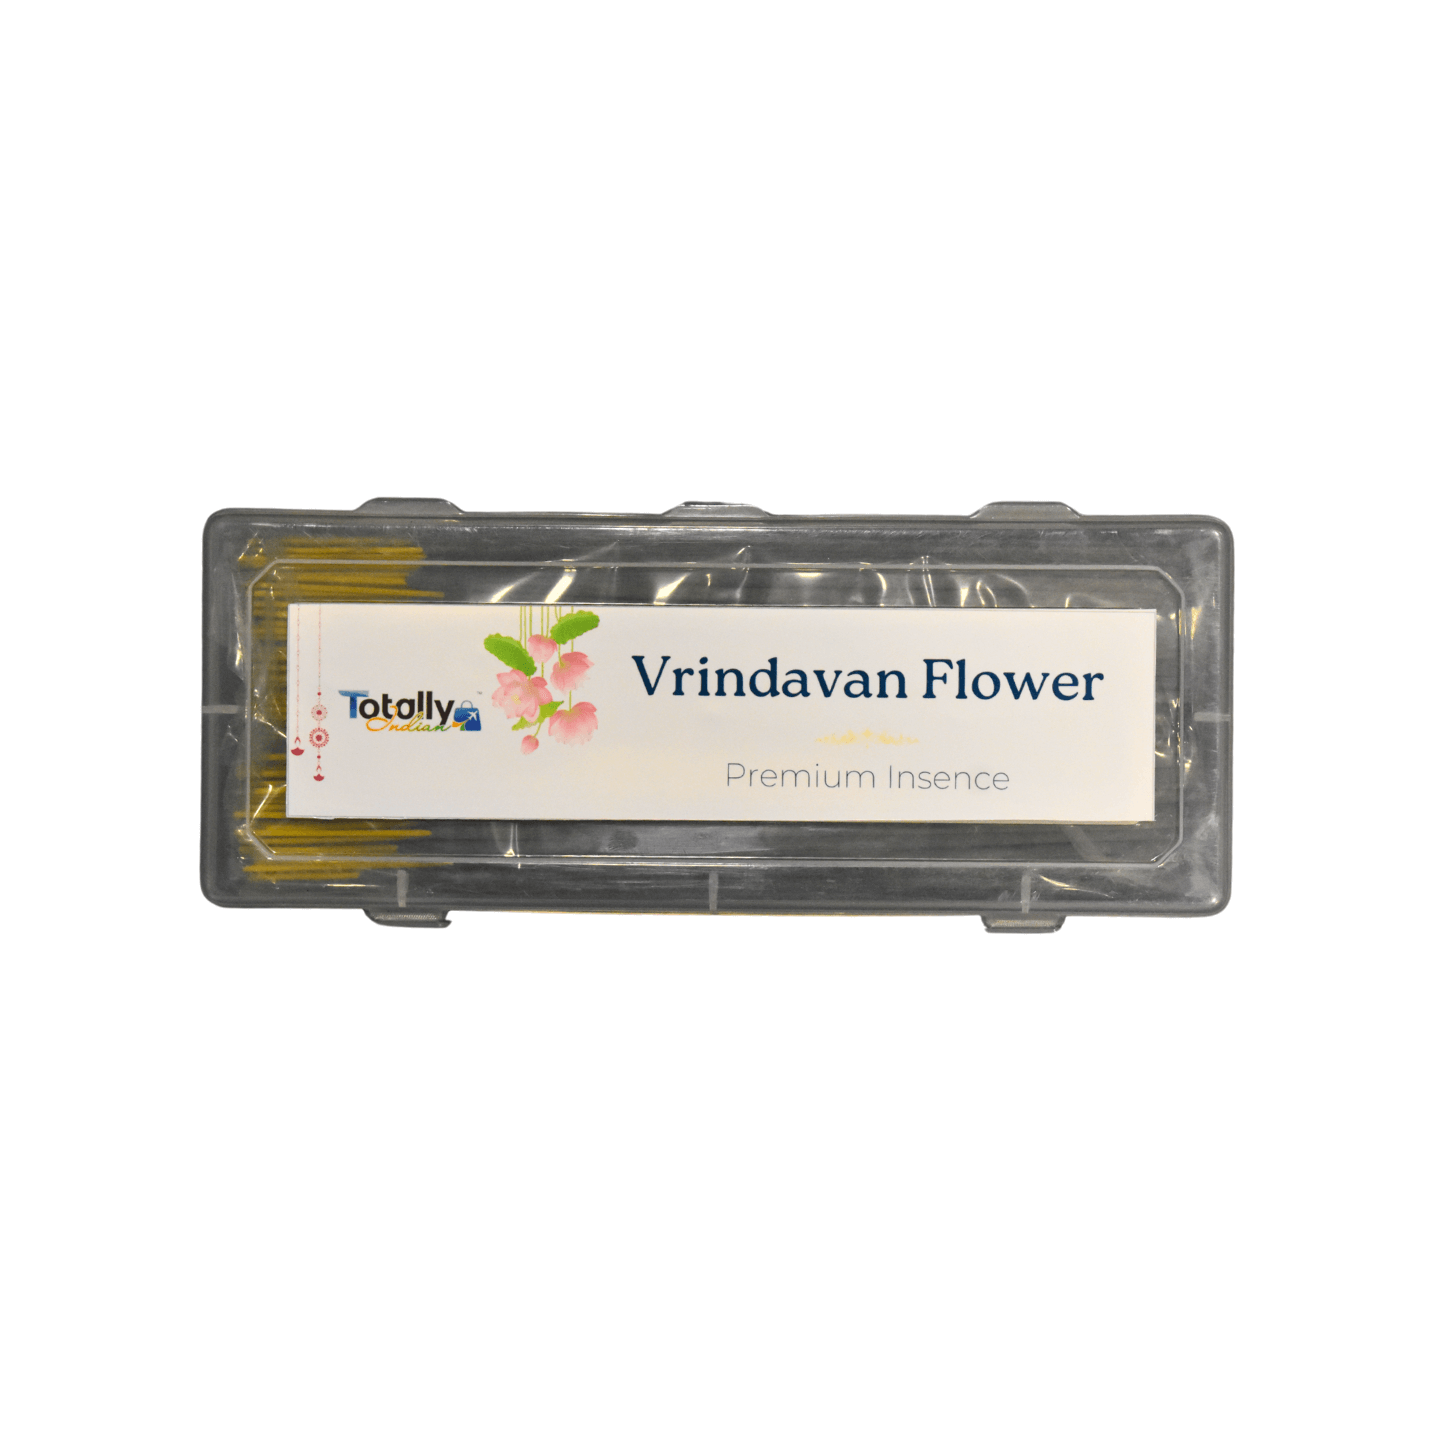 Smoke-less Premium Masala Incense | Vrindavan Flower - Totally Indian